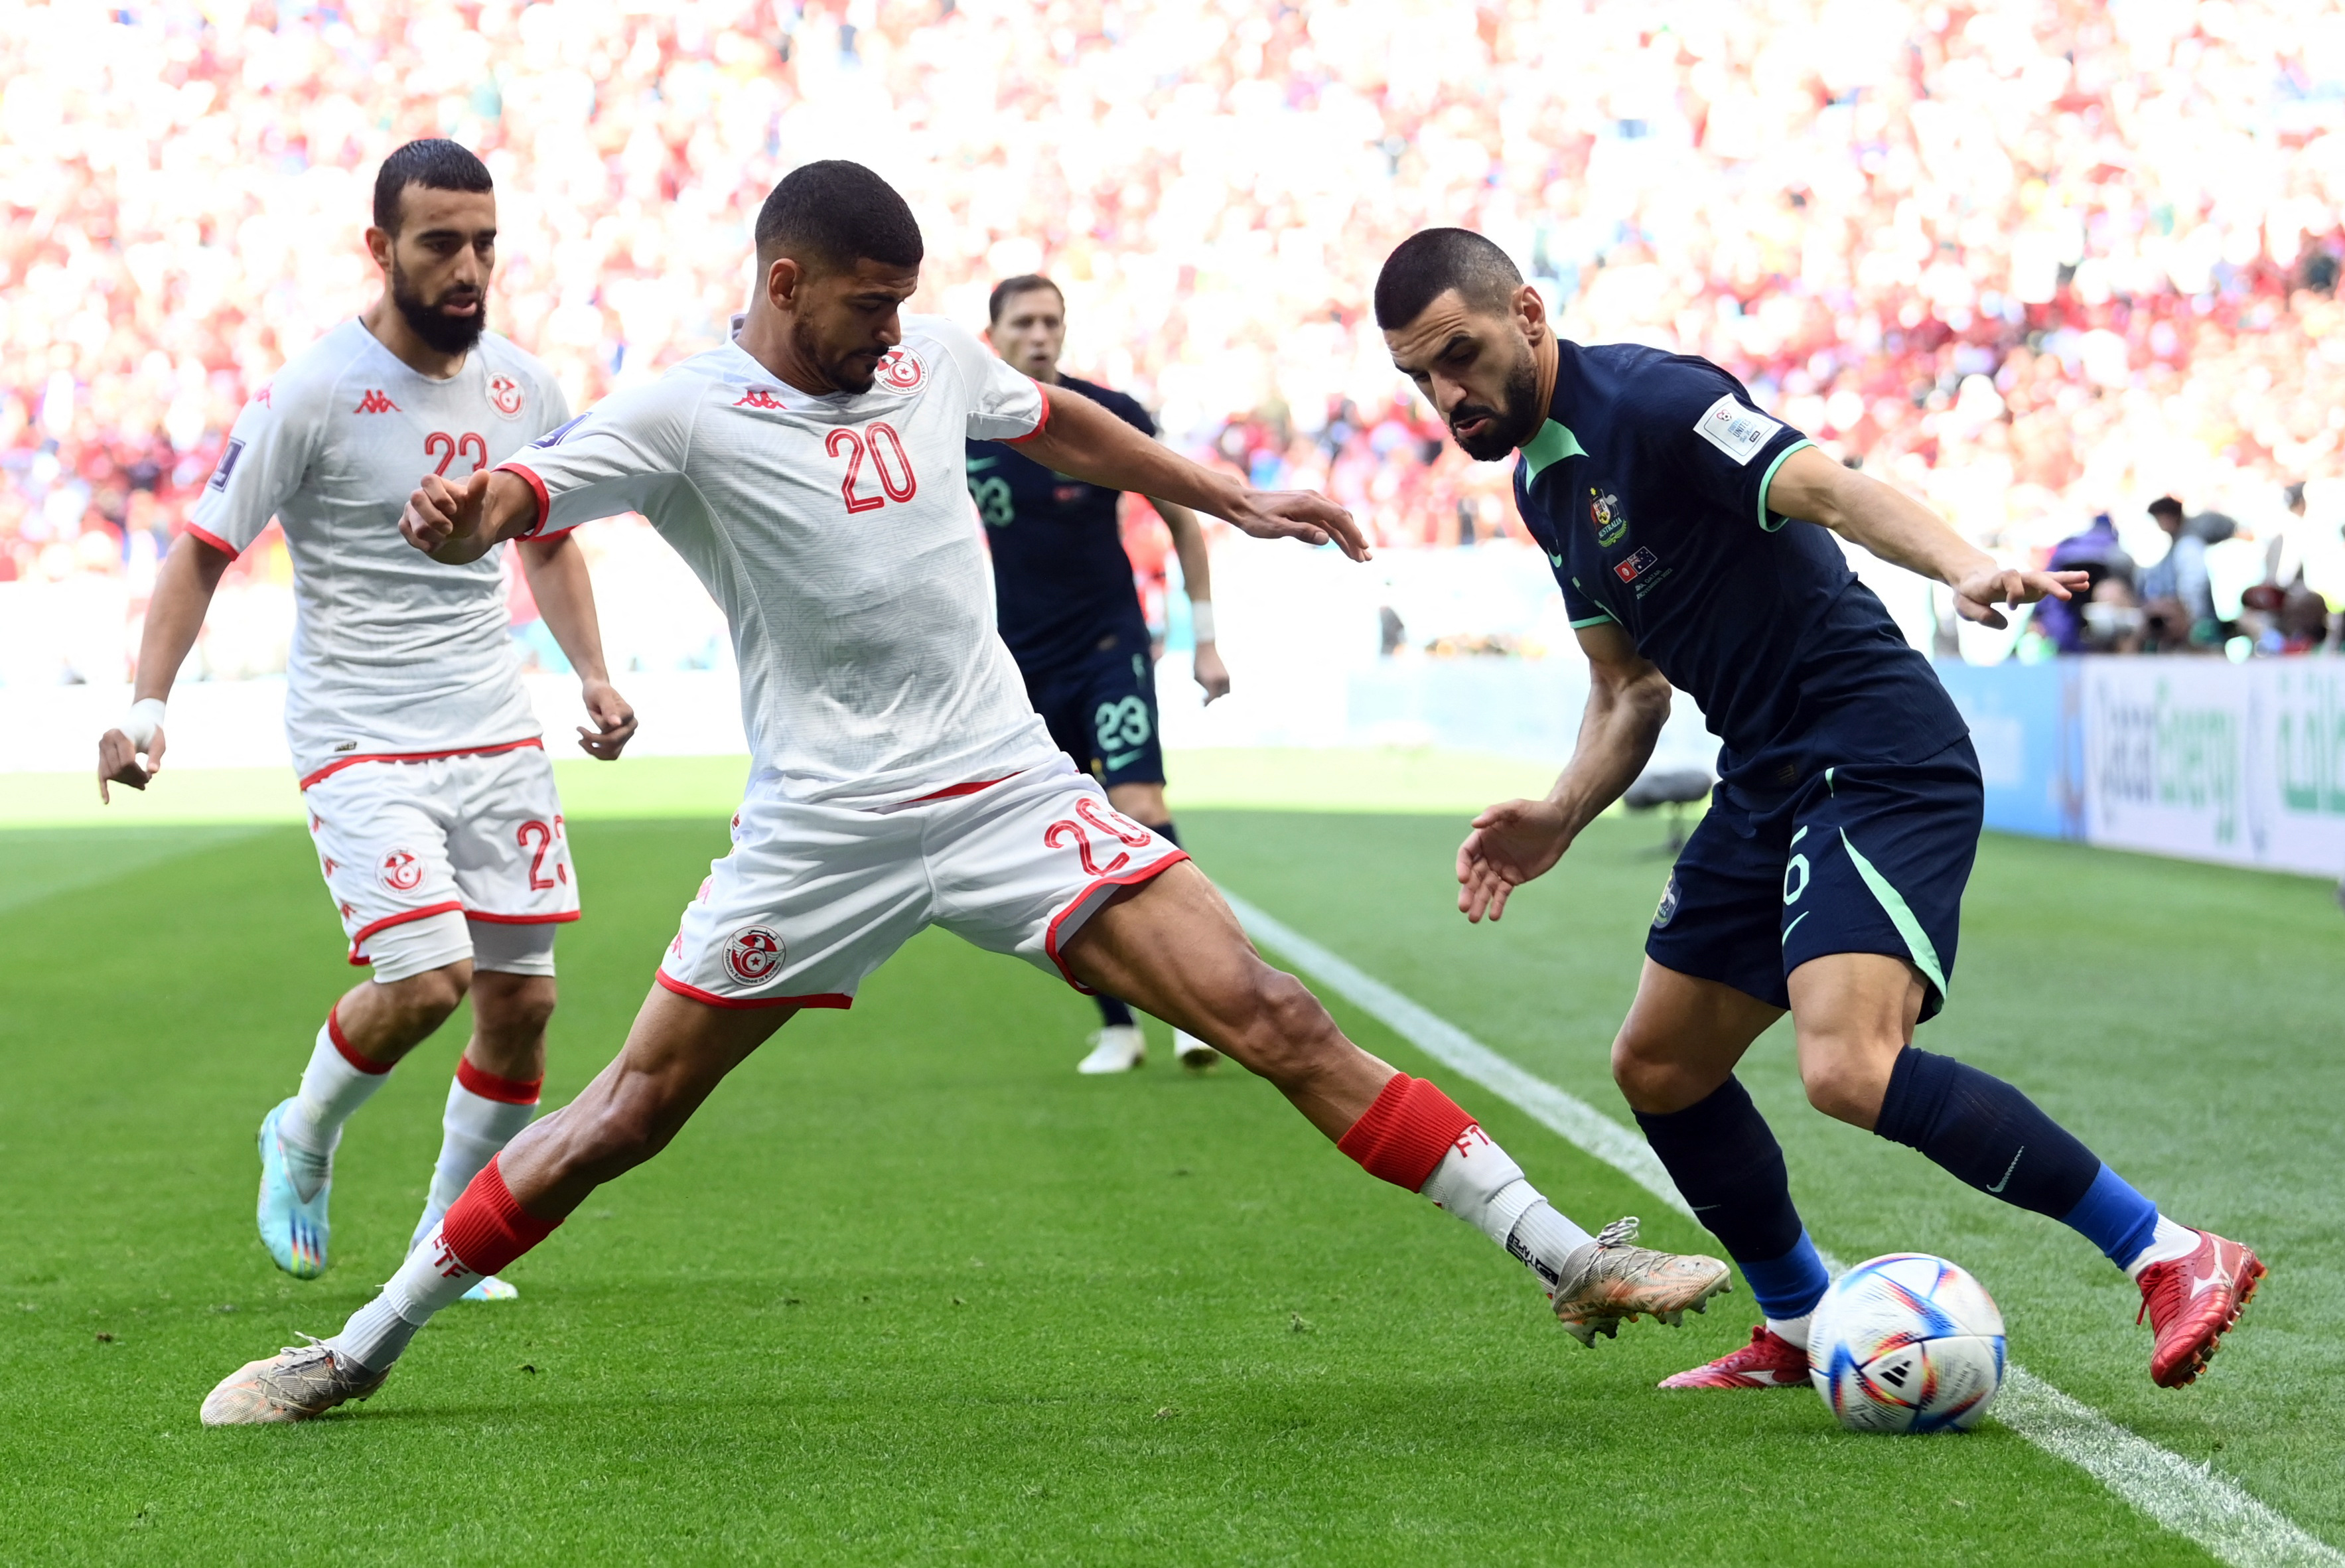 Túnez se defiende bien del ataque de Australia en los primeros minutos del partido | REUTERS/Annegret Hilse